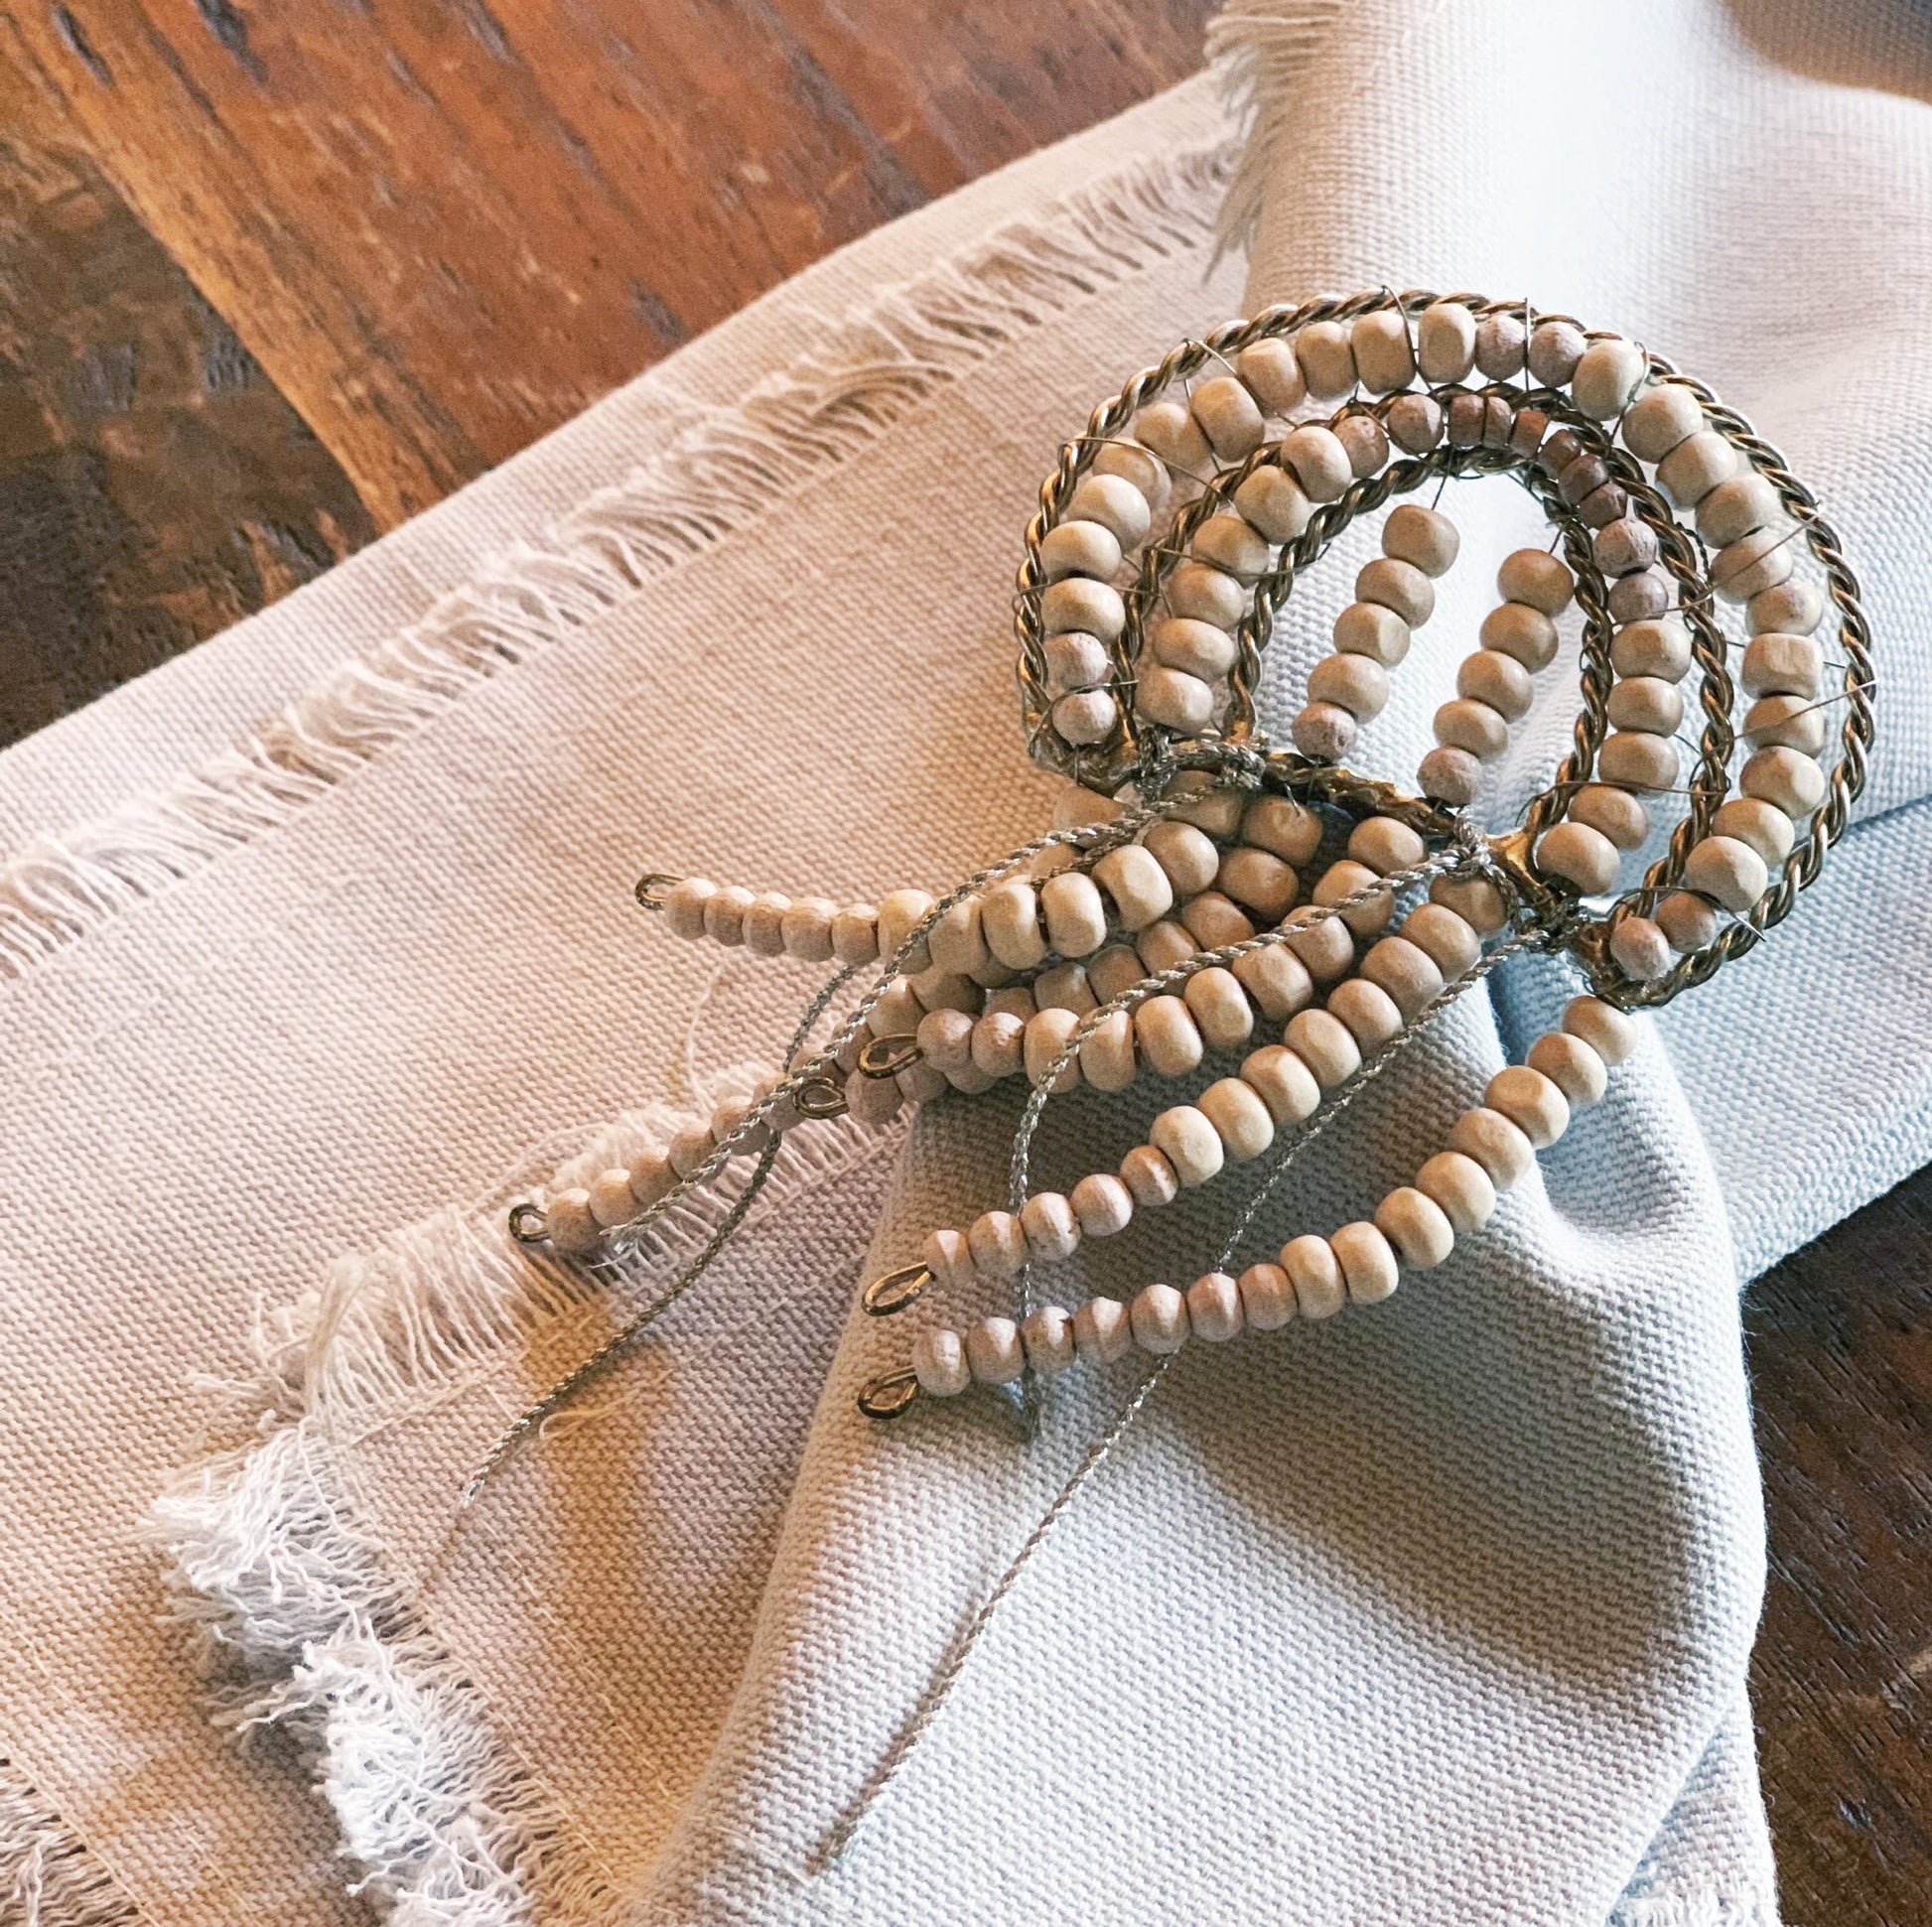 Jellyfish shaped napkin ring crafted of natural beads enclosing a natural cotton napkin.